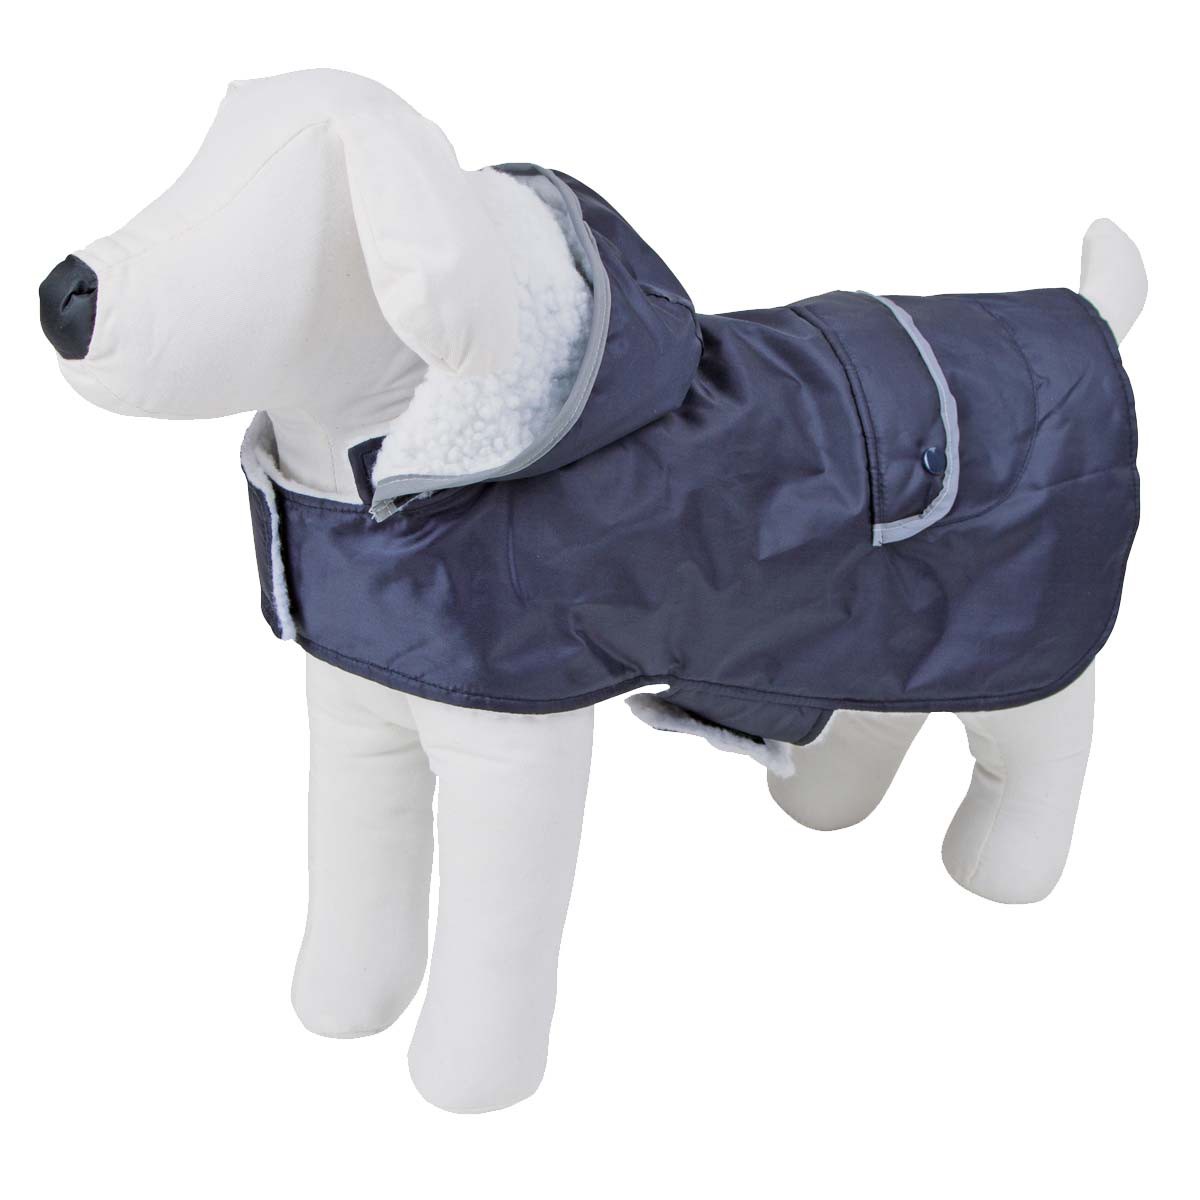 TEDDY dog coat Girth measurement 32-43cm